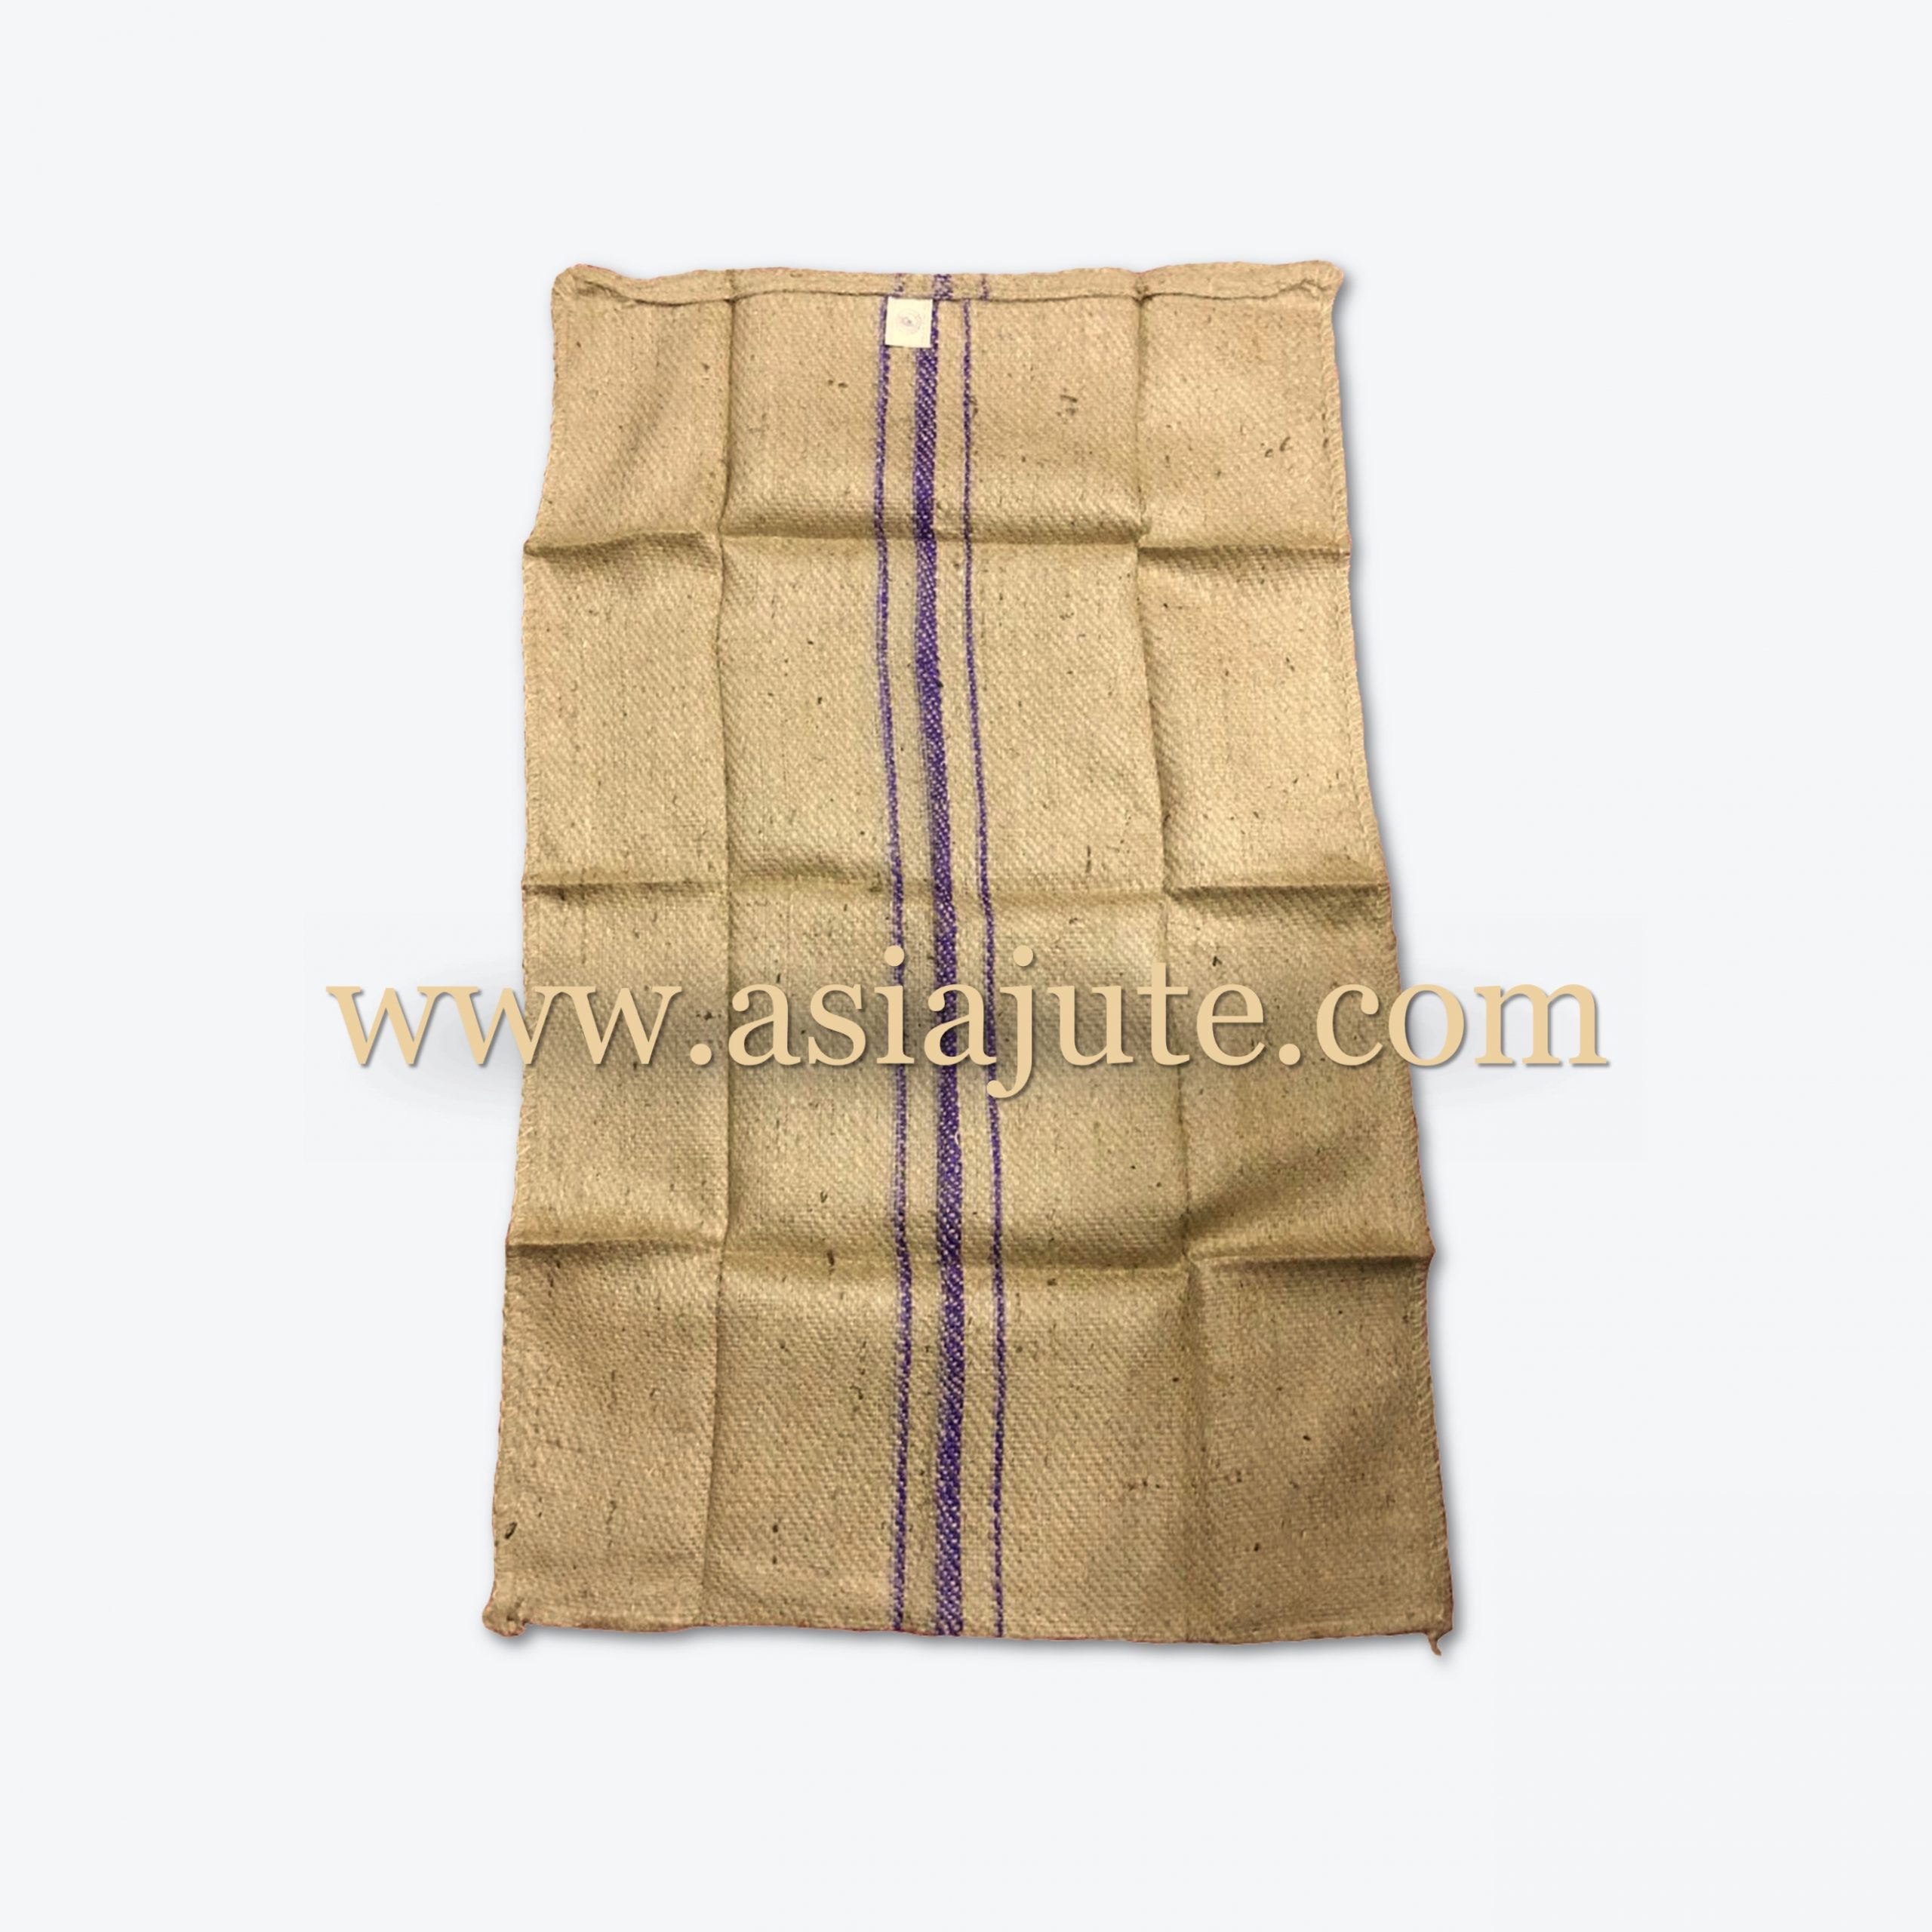 VOT Binola Jute Bags Manufacturer Exporter Wholesale Bangladesh Jute Bag